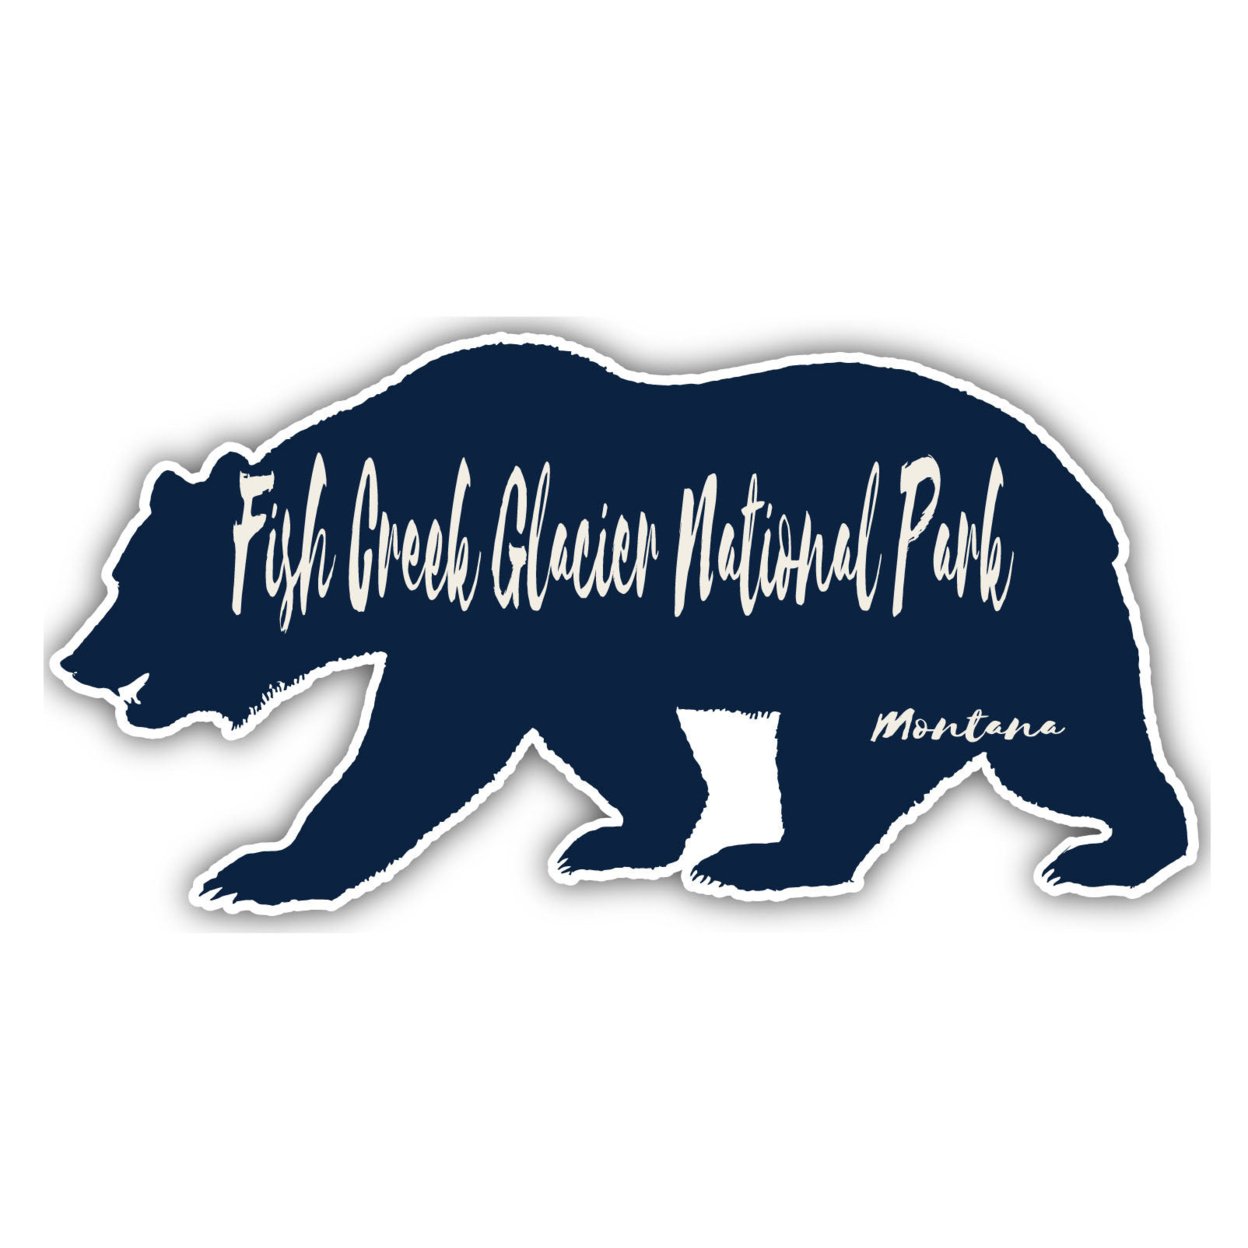 Fish Creek Glacier National Park Montana Souvenir Decorative Stickers (Choose Theme And Size) - 4-Pack, 2-Inch, Bear